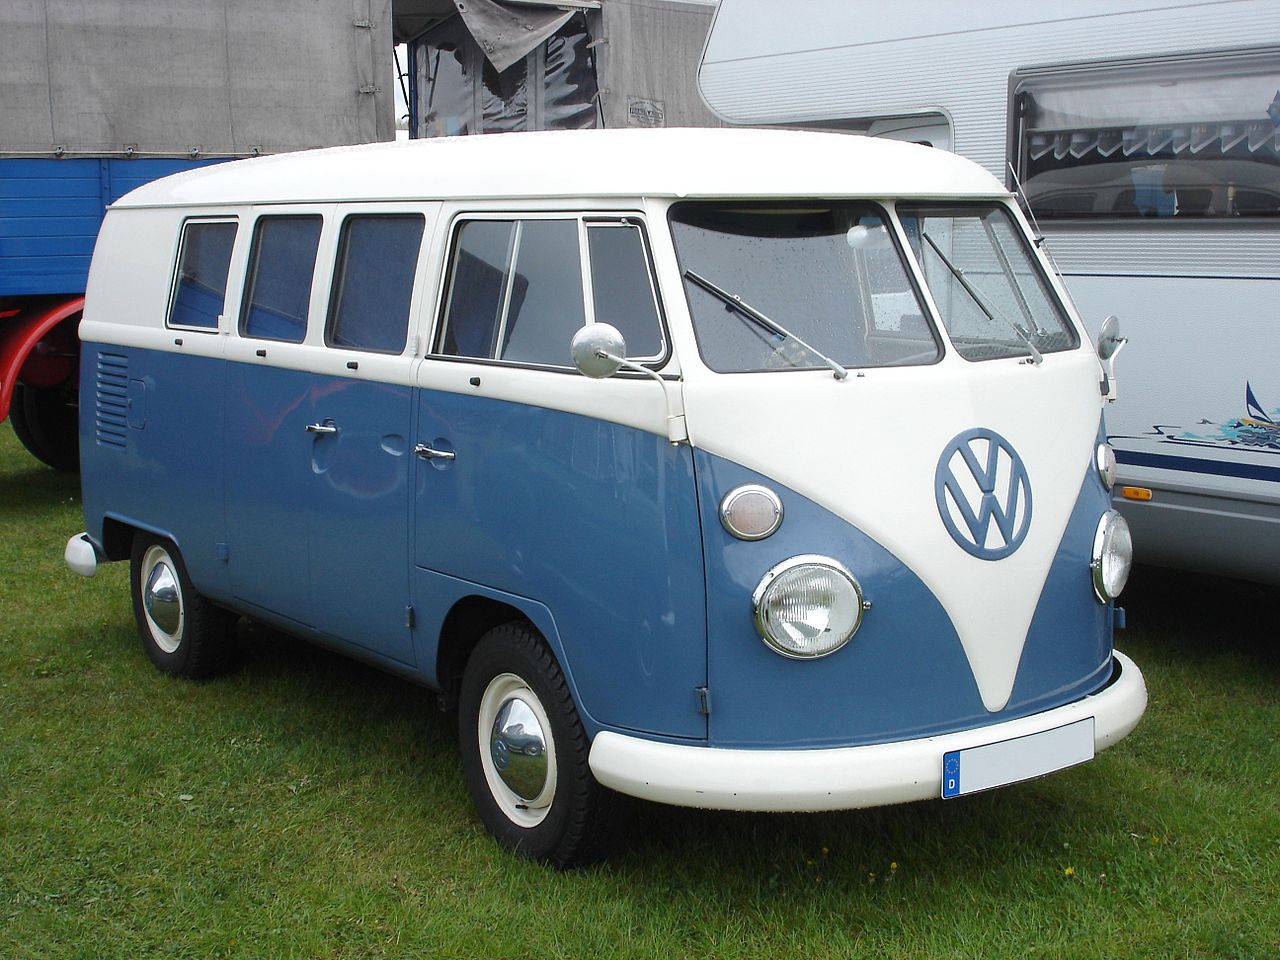 First Drive: Volkswagen Bulli